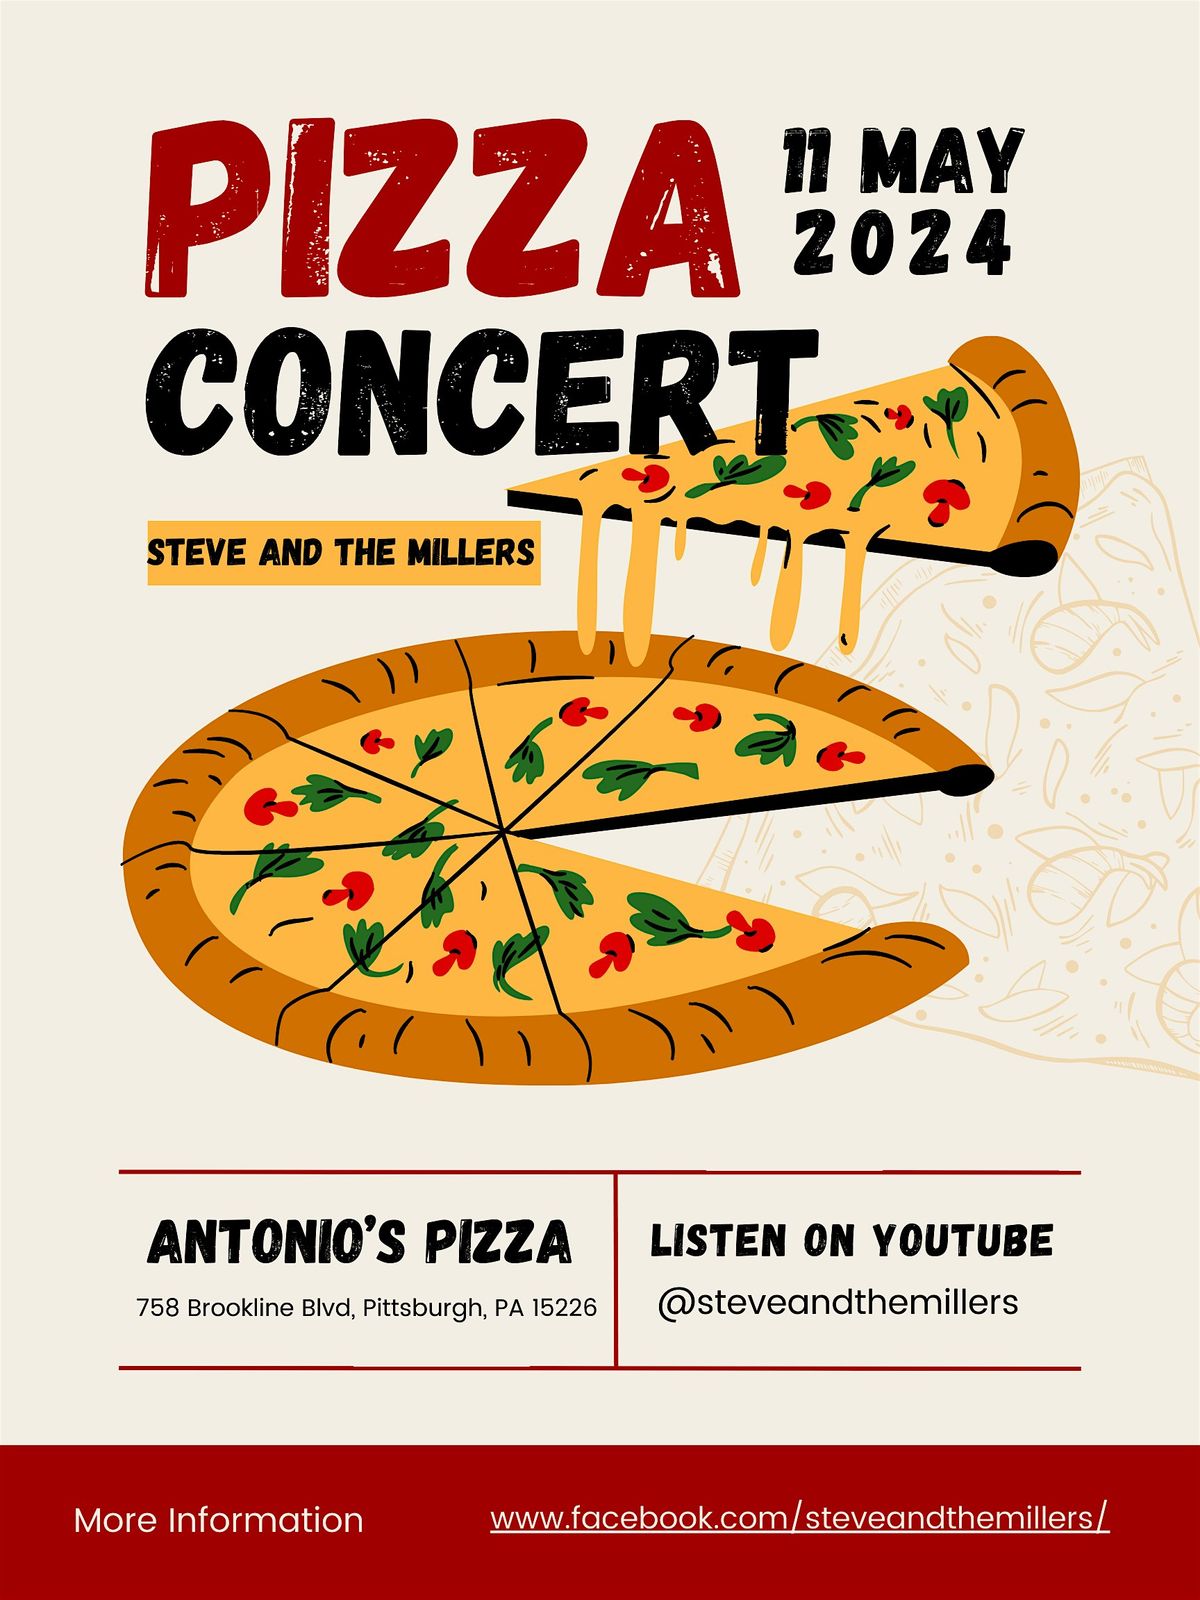 Steve and the Millers-Antonio's Pizzeria Concert